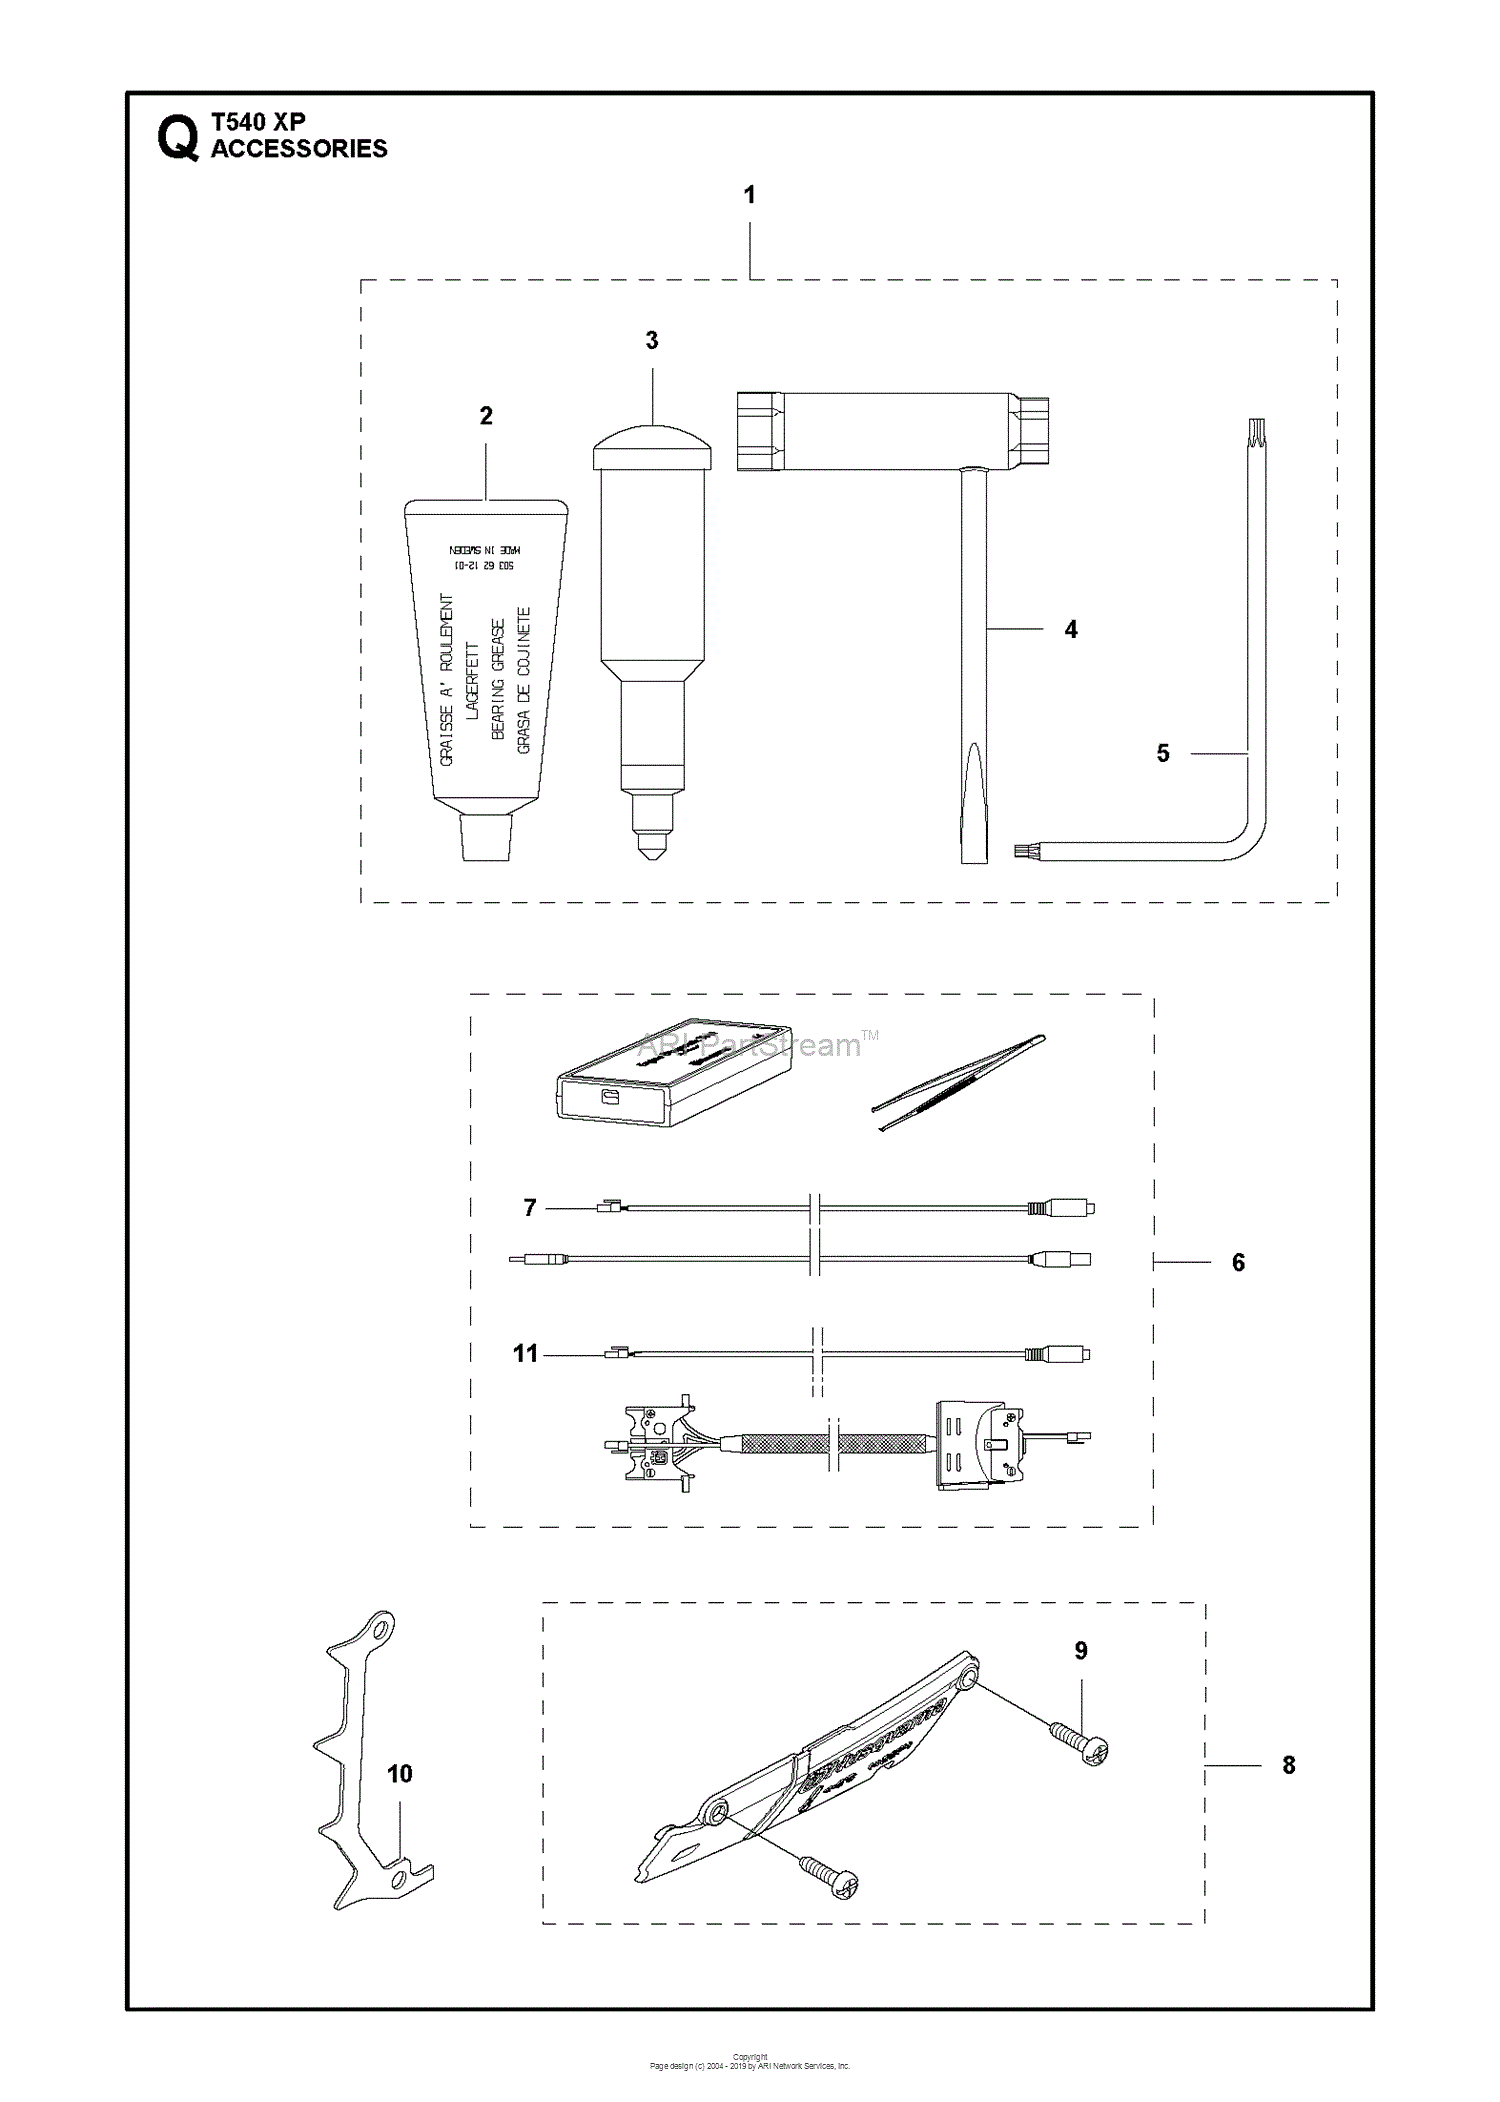 Husqvarna T540 XP Parts Diagram for *Accessories model a wiring diagram 